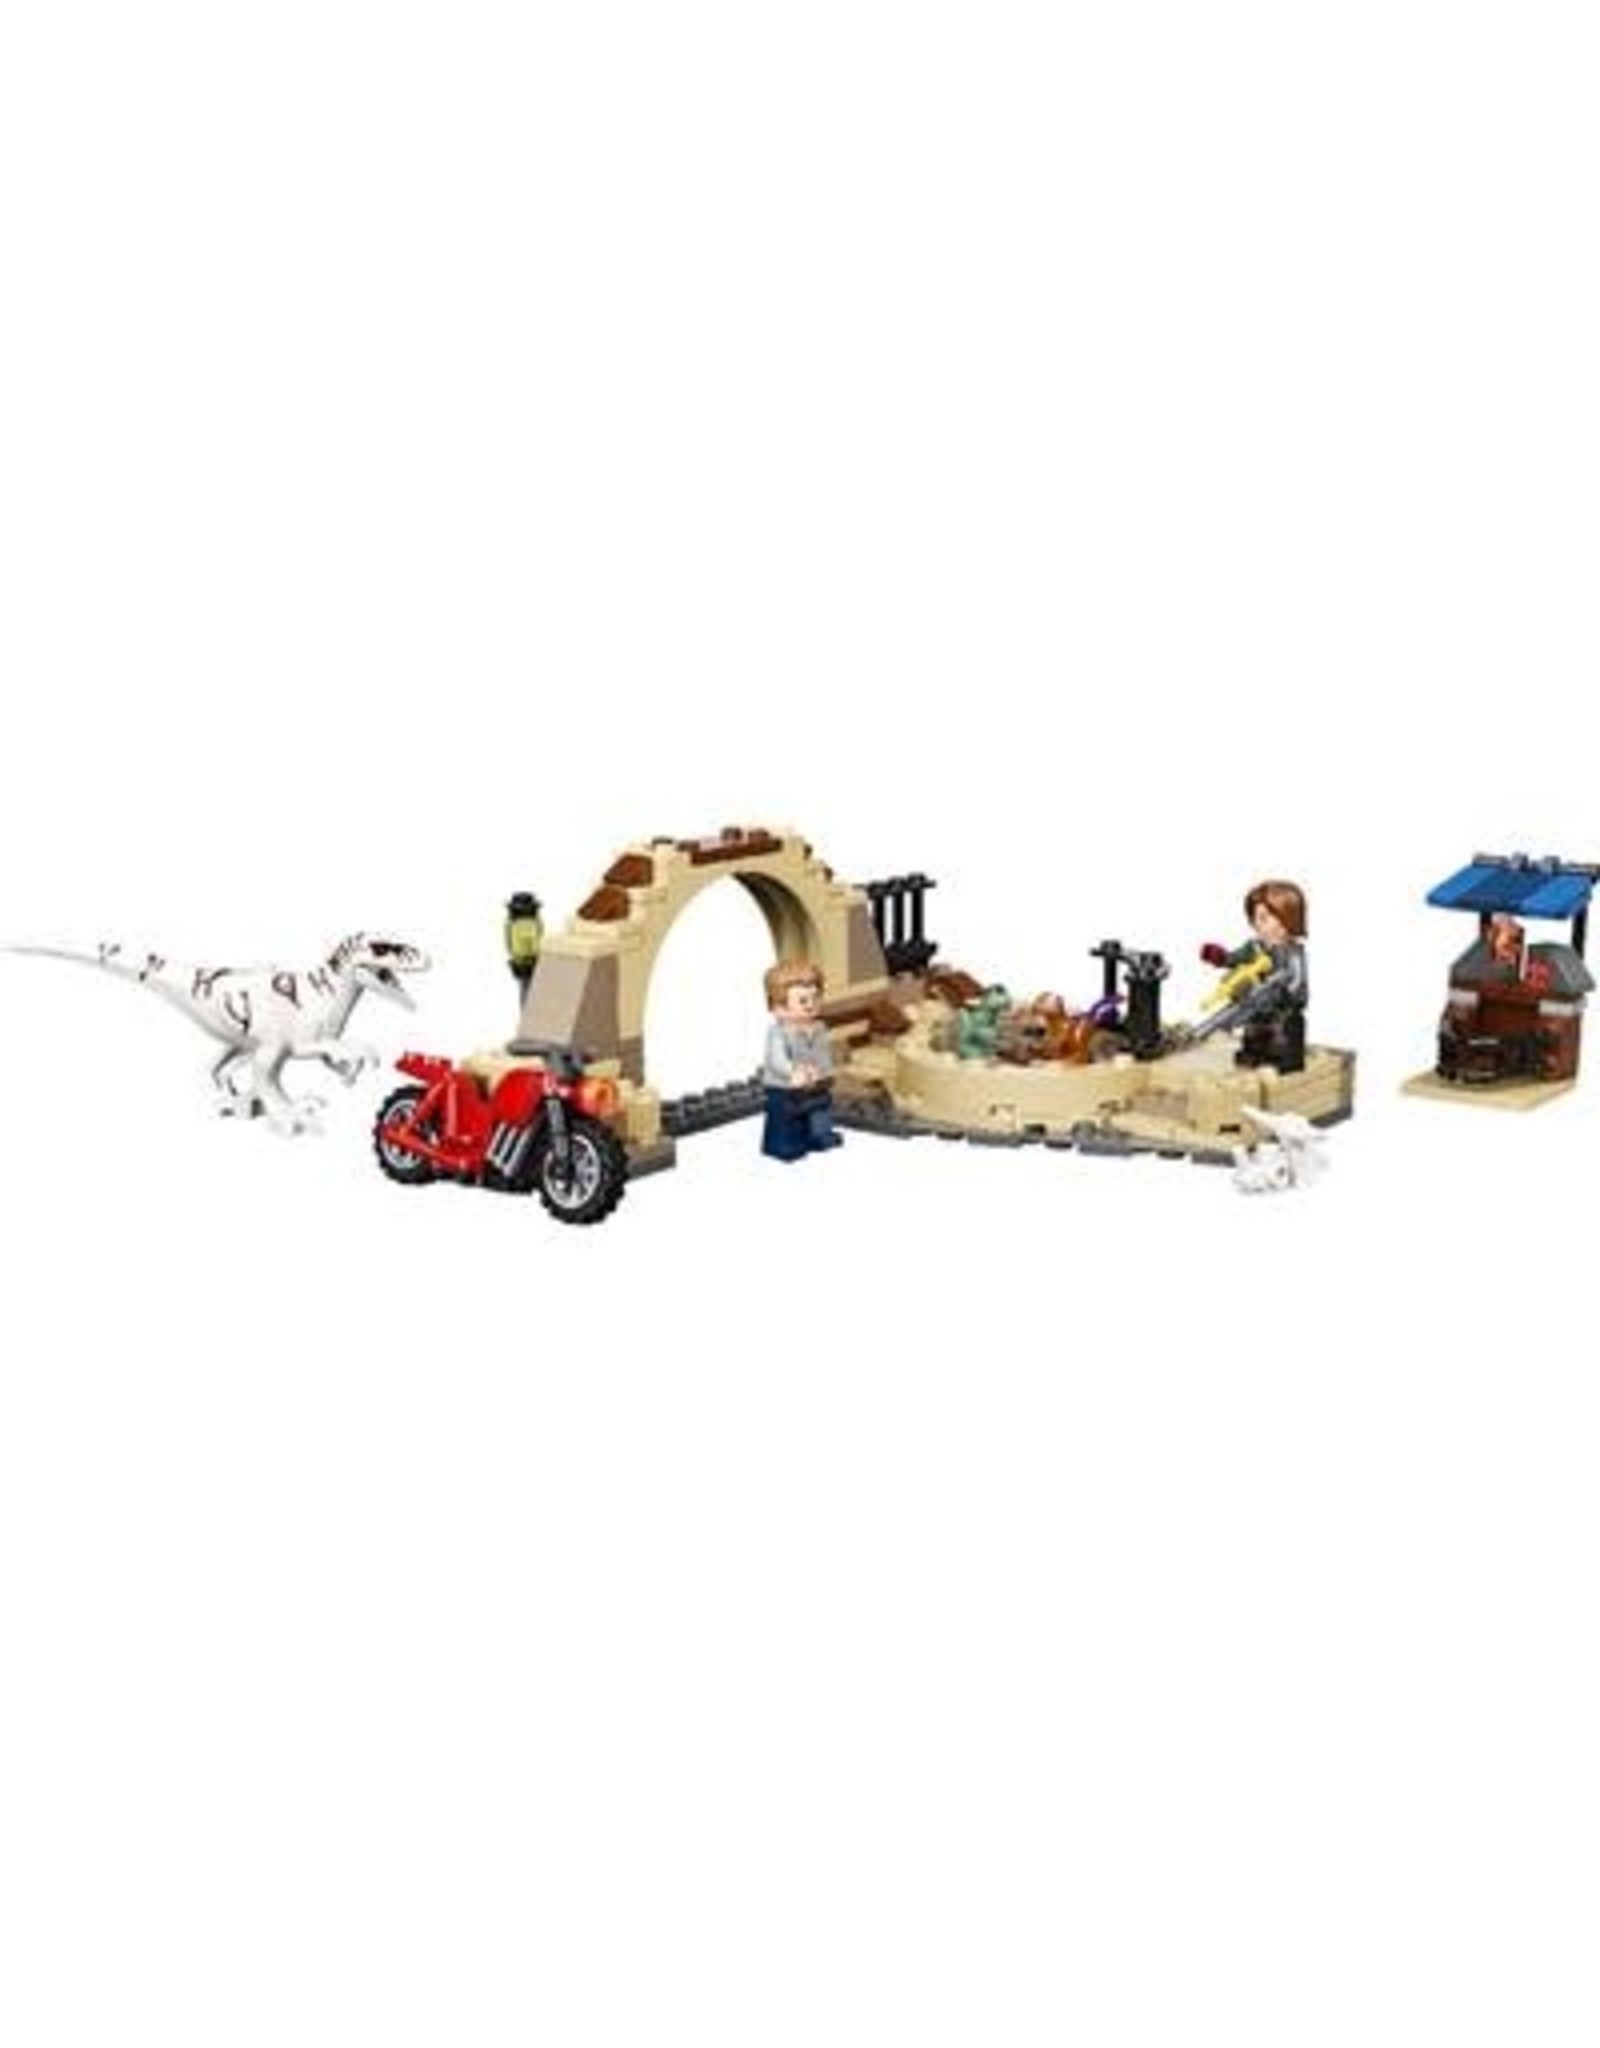 LEGO Lego Jurassic World 76945 Atrociraptor Dinosaurus Motorachtervolging